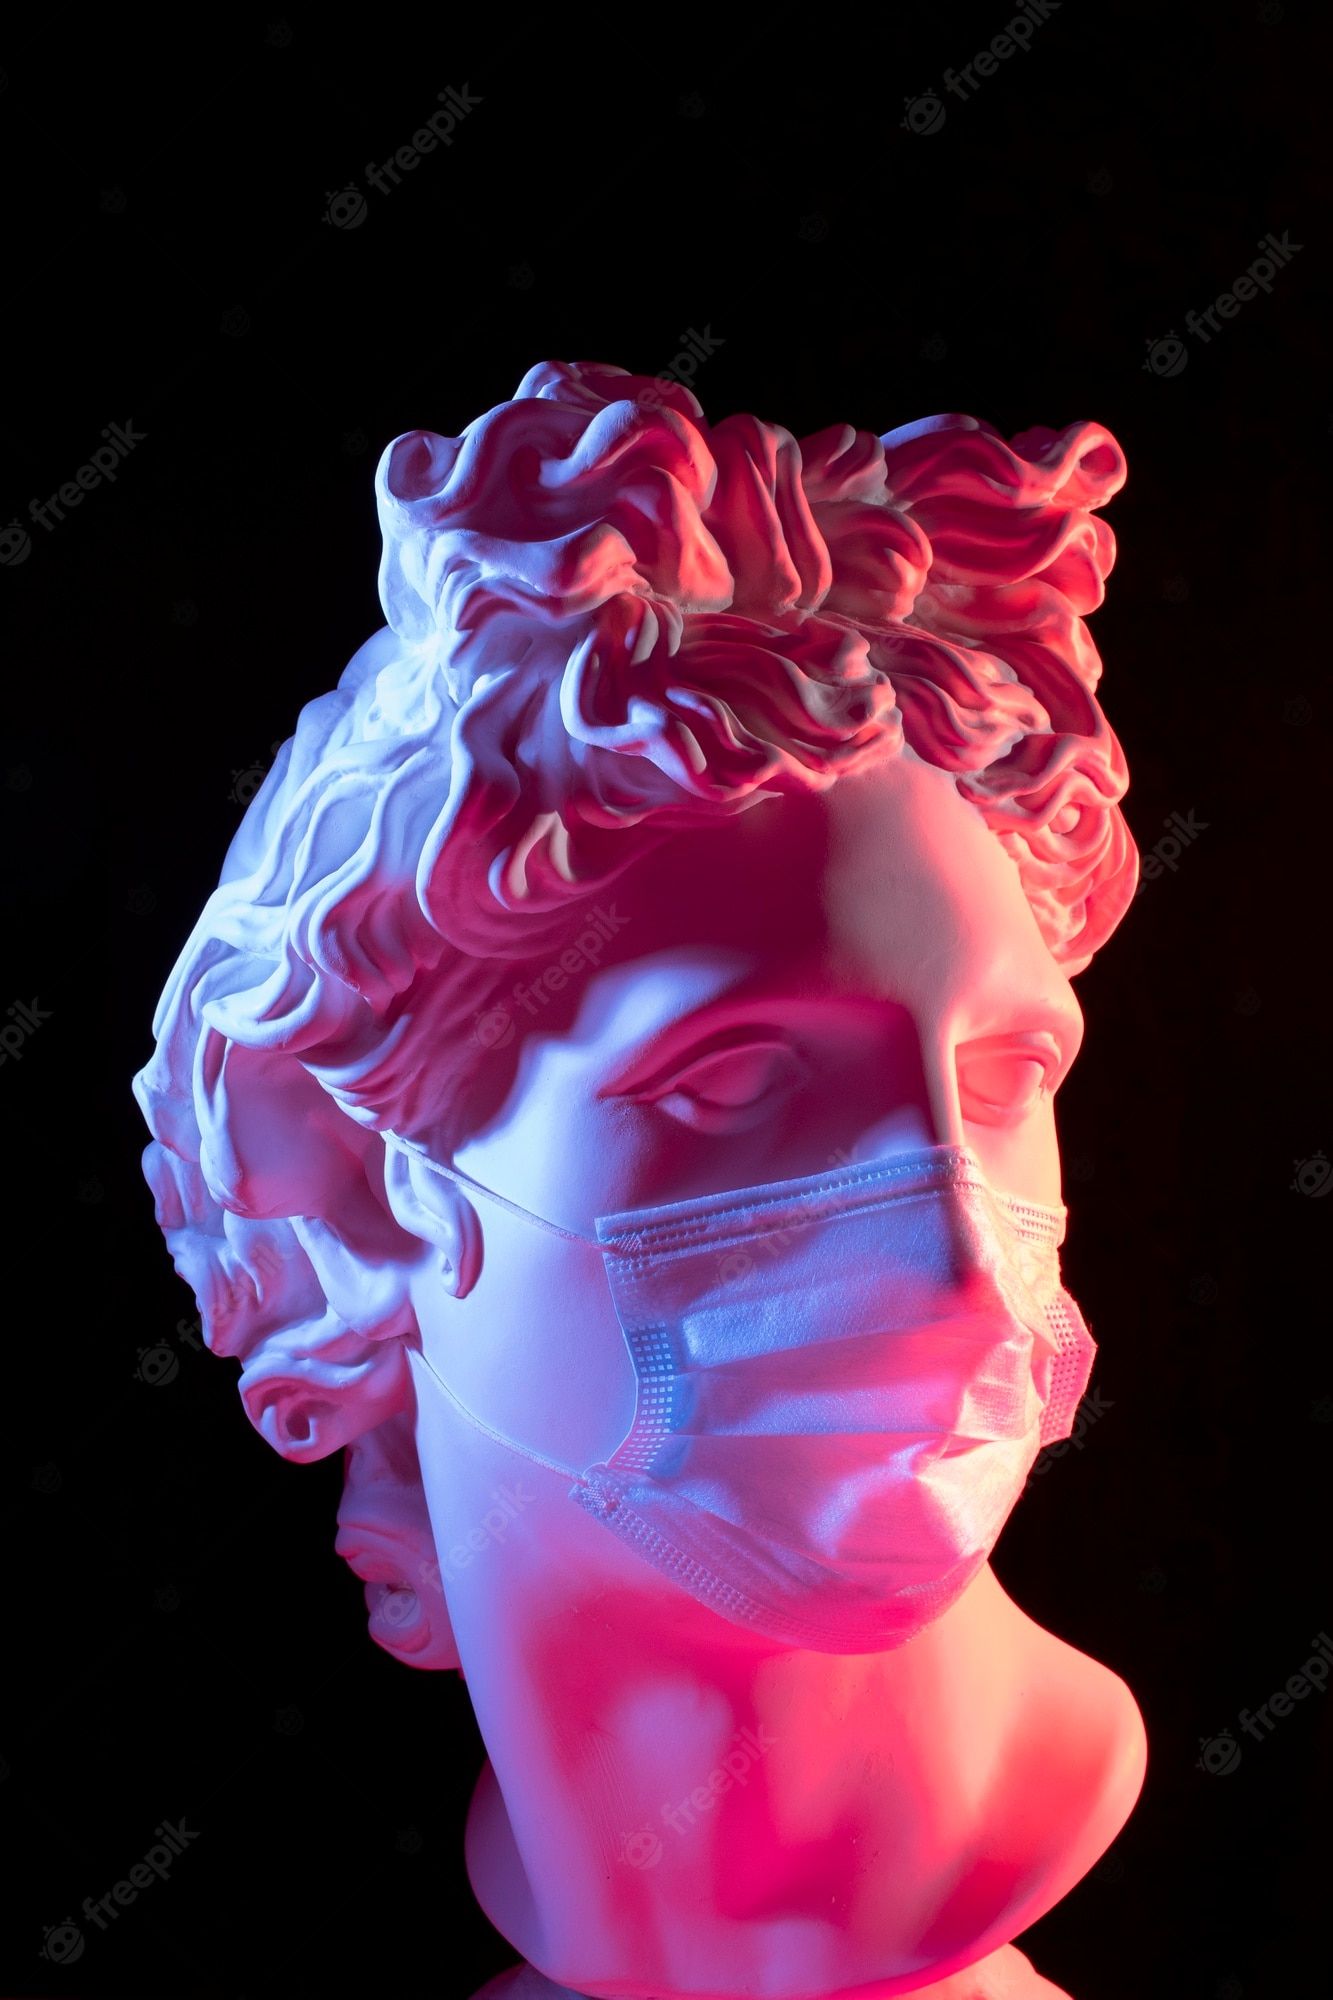 Greek Statue Head Image